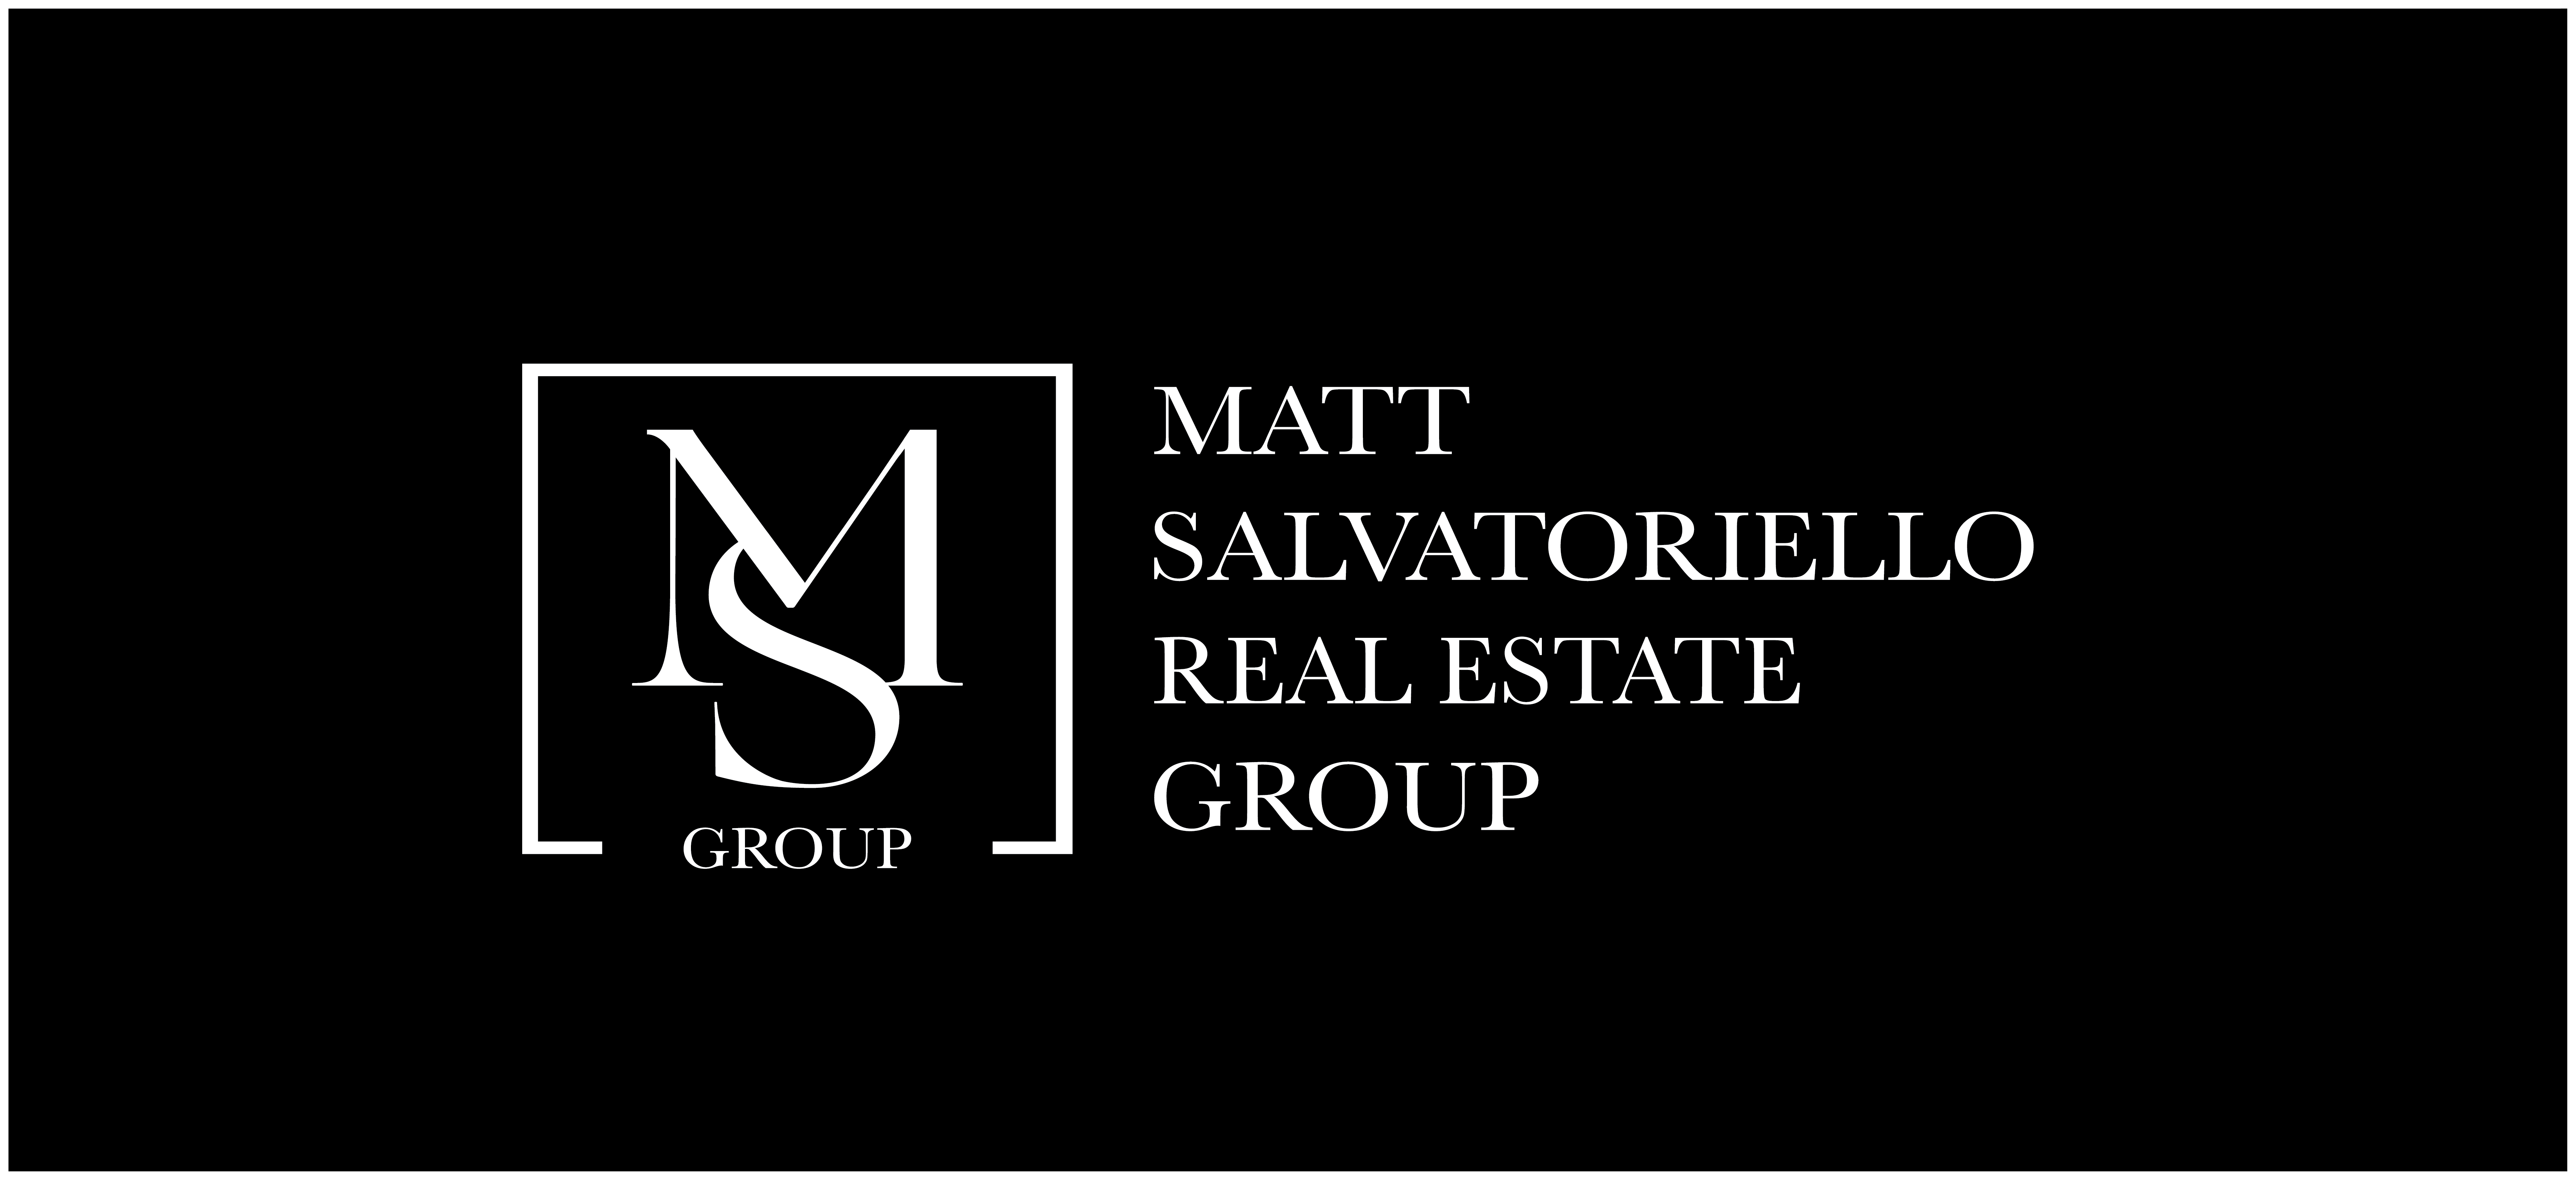 Matt Salvatoriello Real Estate Group